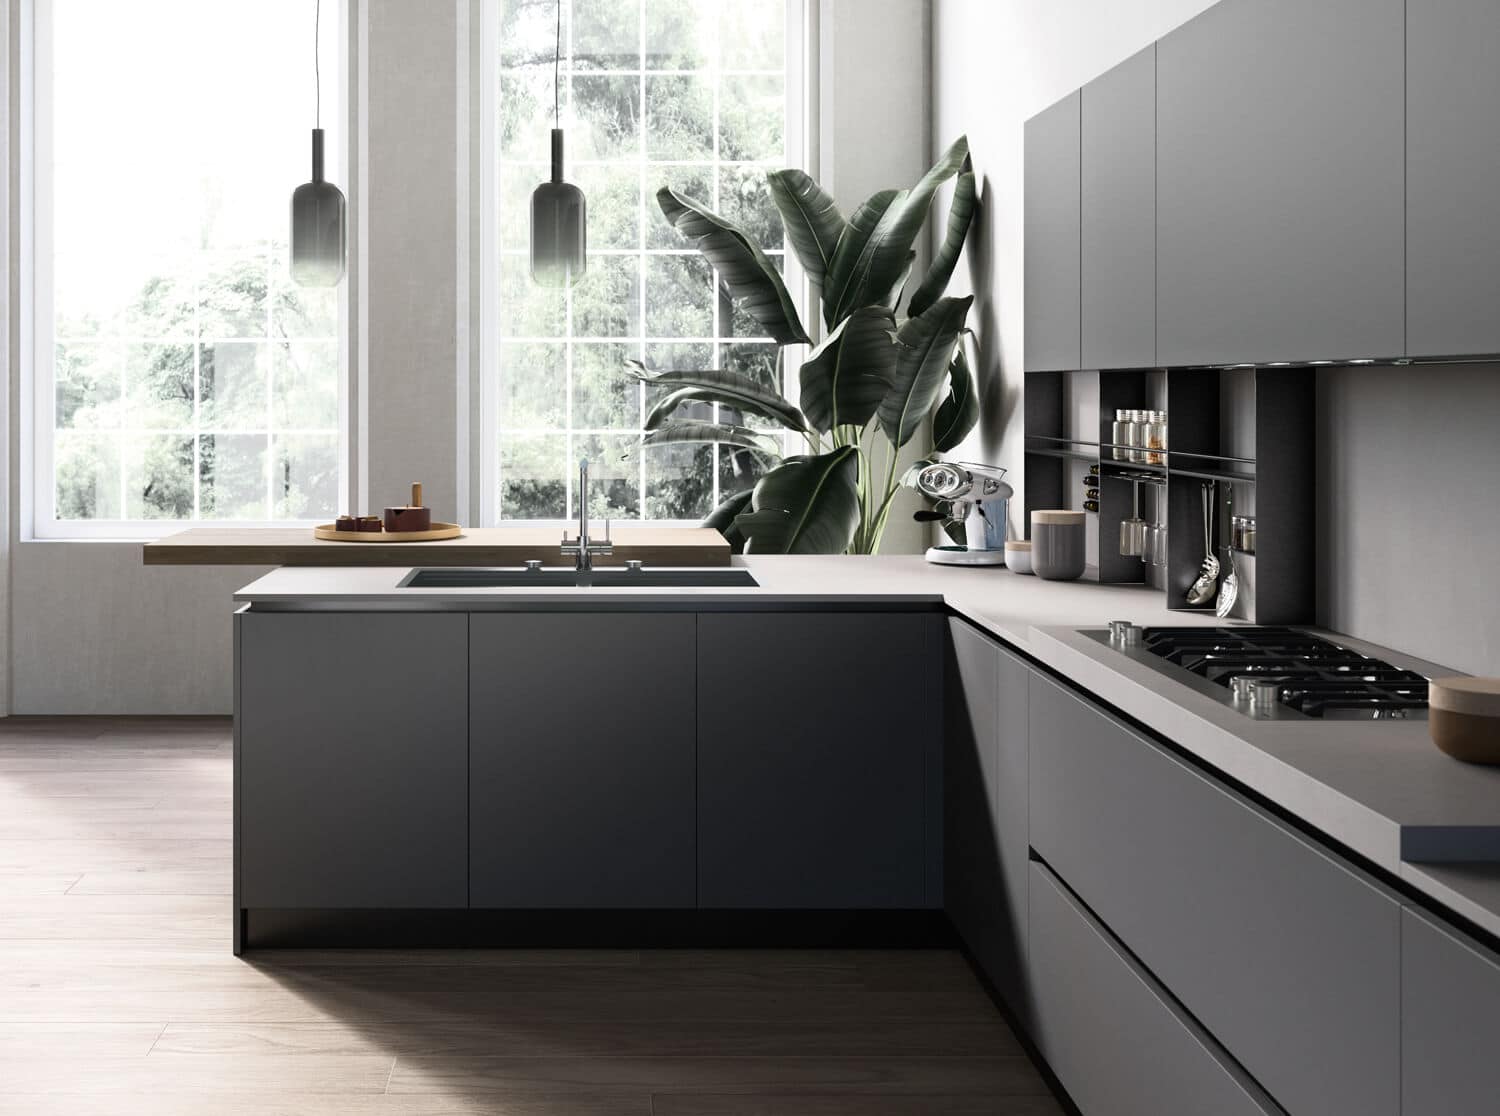 Minimalist kitchen design with corner peninsula. Smooth grey finish.